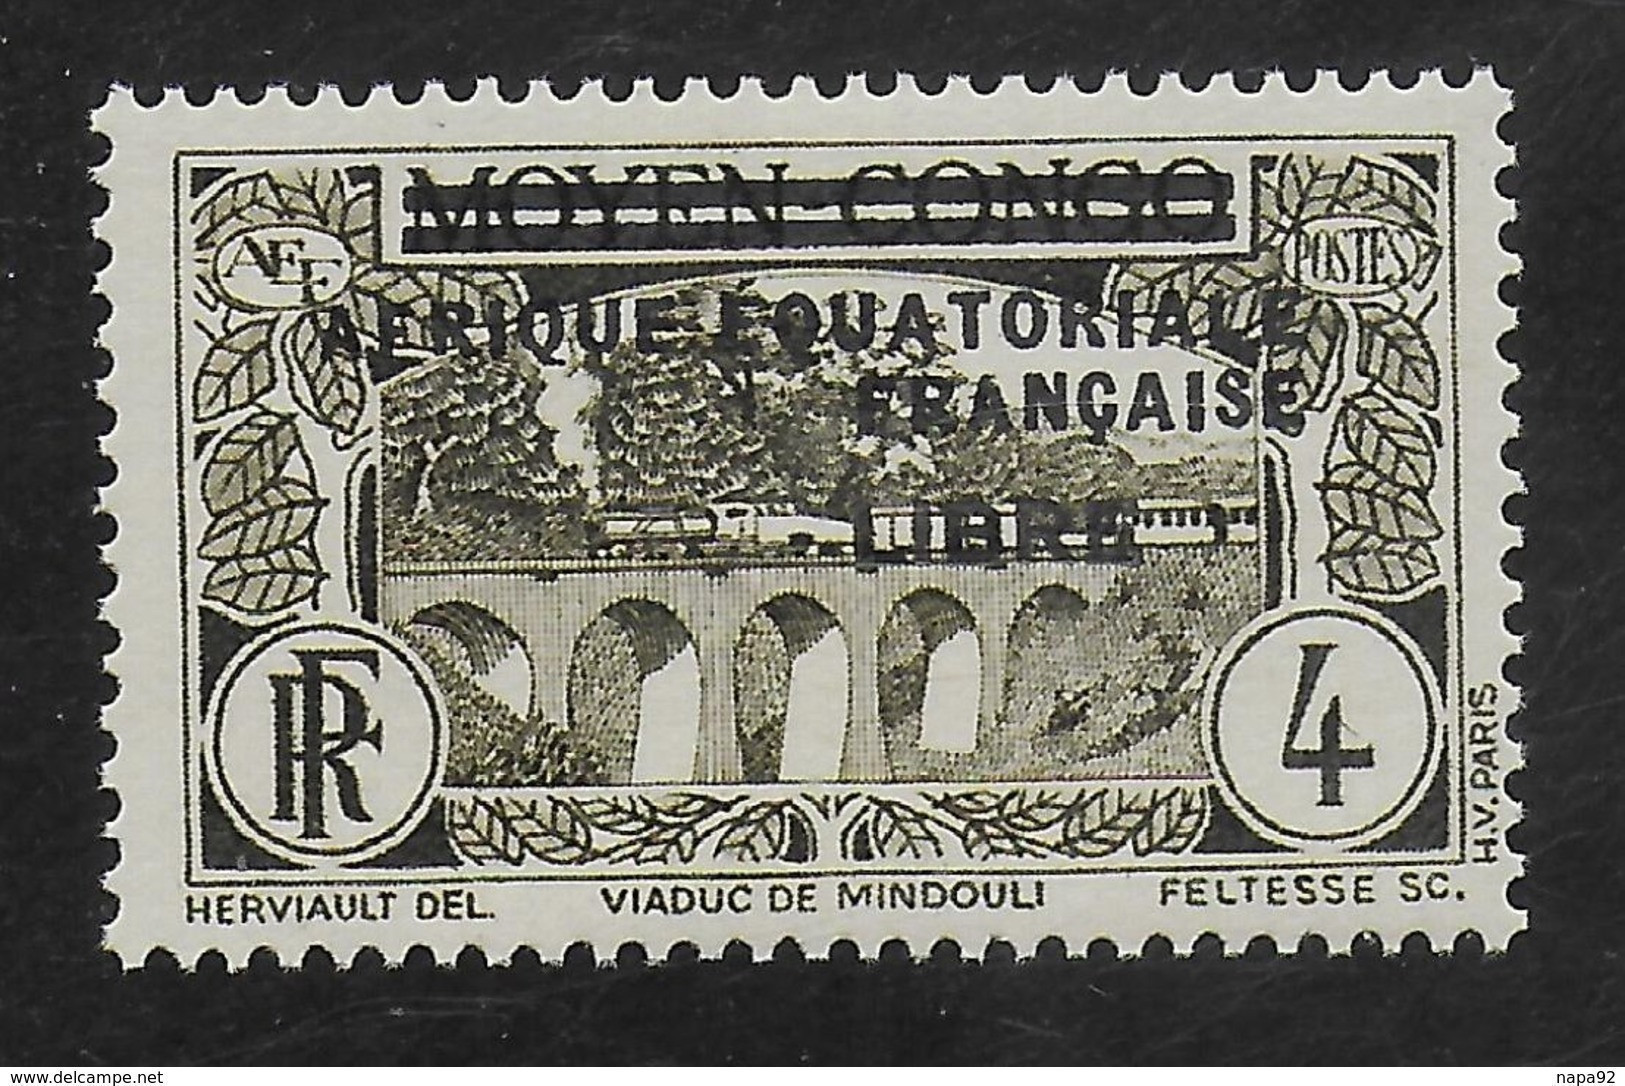 AFRIQUE EQUATORIALE FRANCAISE - AEF - A.E.F. - 1940 - YT 102** - Unused Stamps